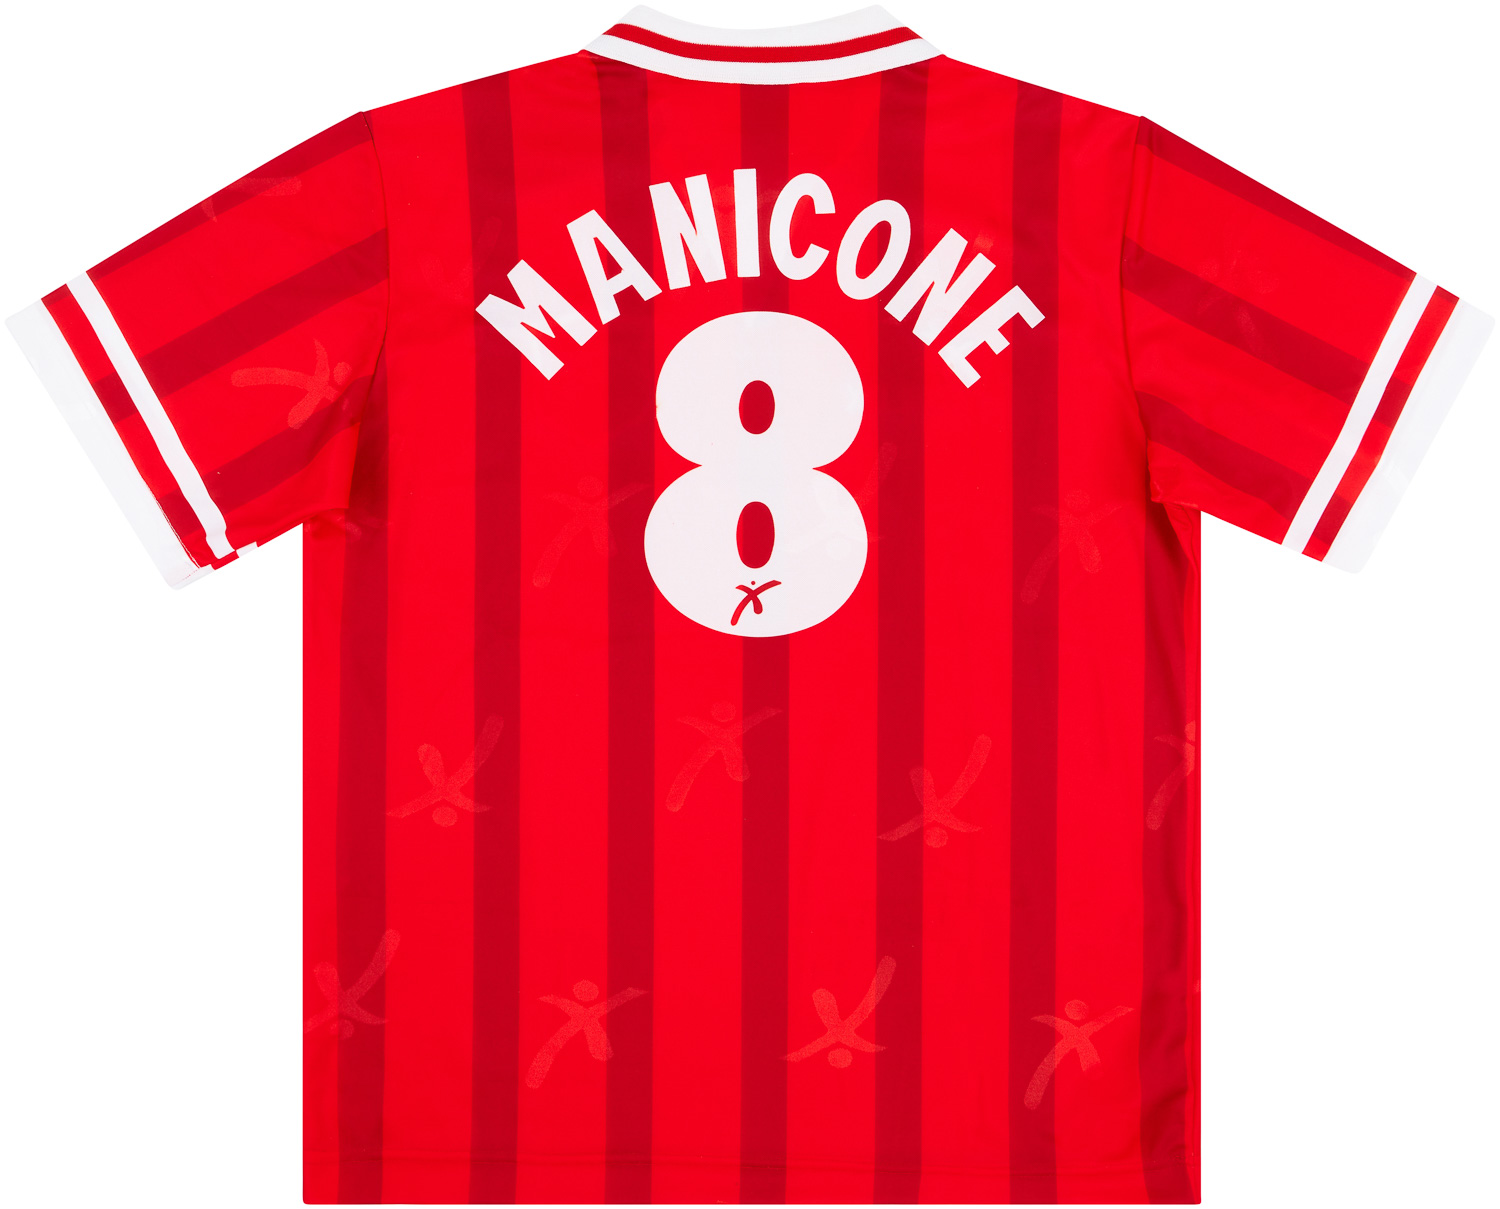 1996-97 Perugia Player Issue Home Shirt Manicone #8